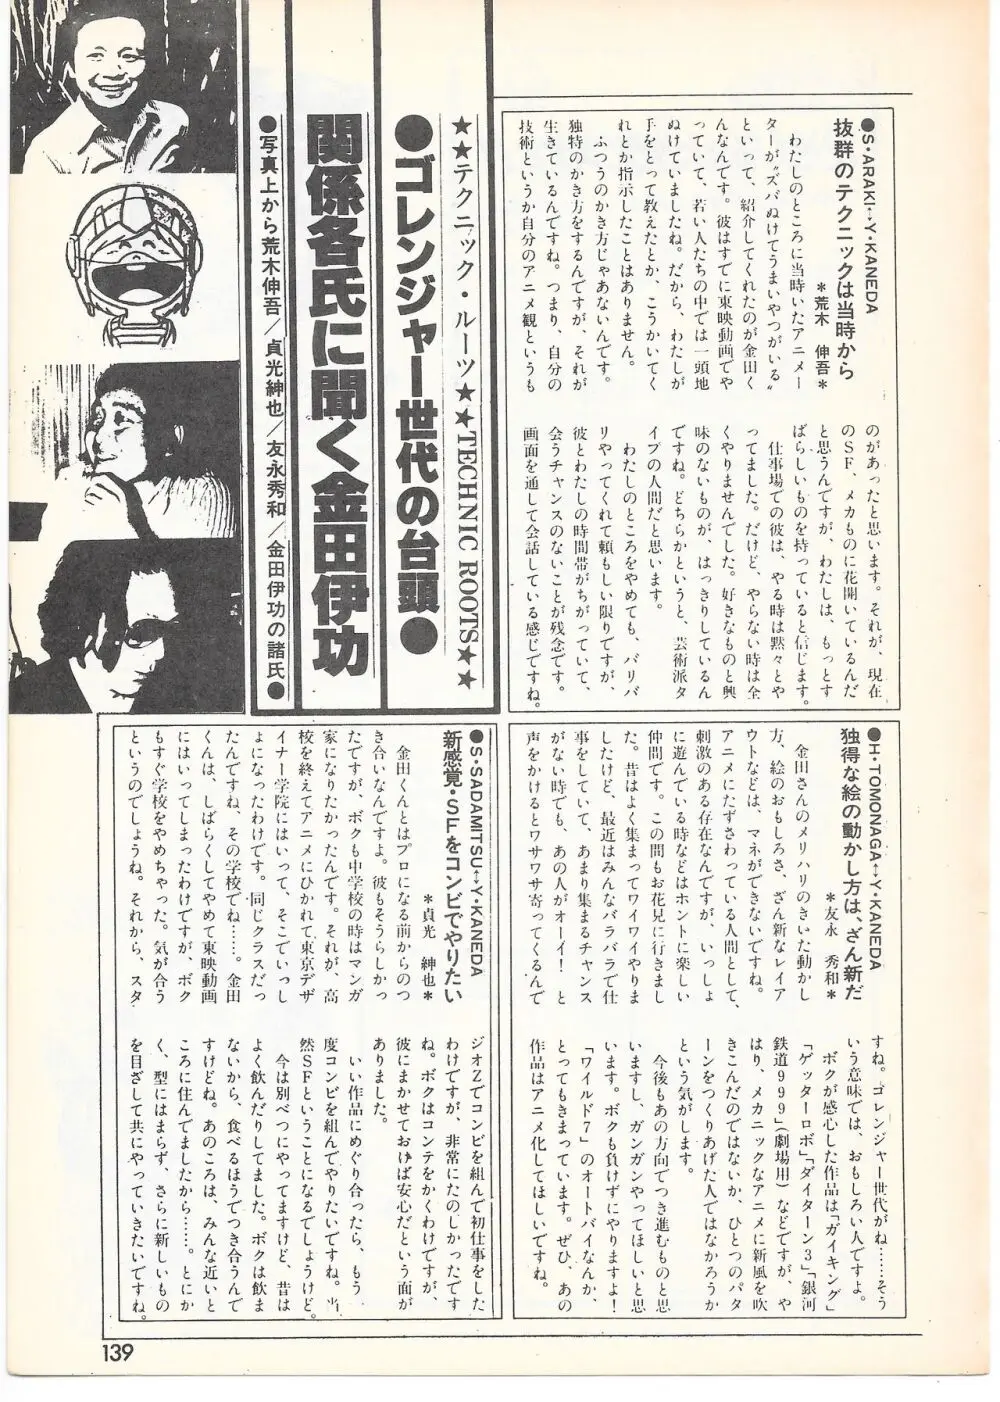 THE ANIMATOR 1 金田伊功特集号 - page134